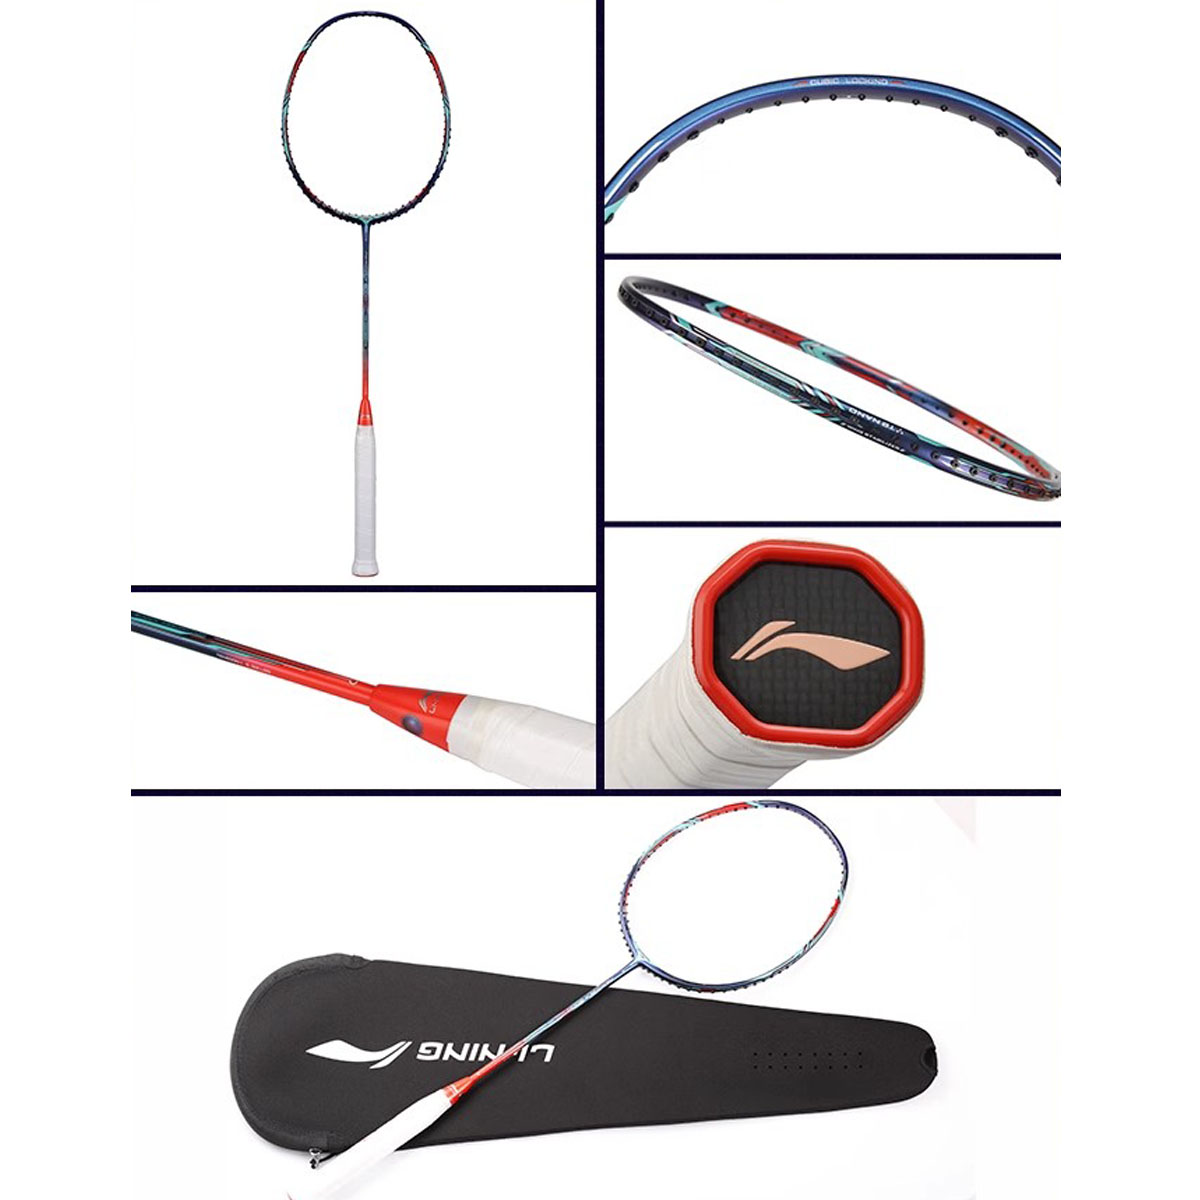 Badminton Racket - Training Racket -Fengdong9000-9000C -9000D- 9000i - 9000olympic Commemoration - All Carbon Ultra Light Carbon Fiber